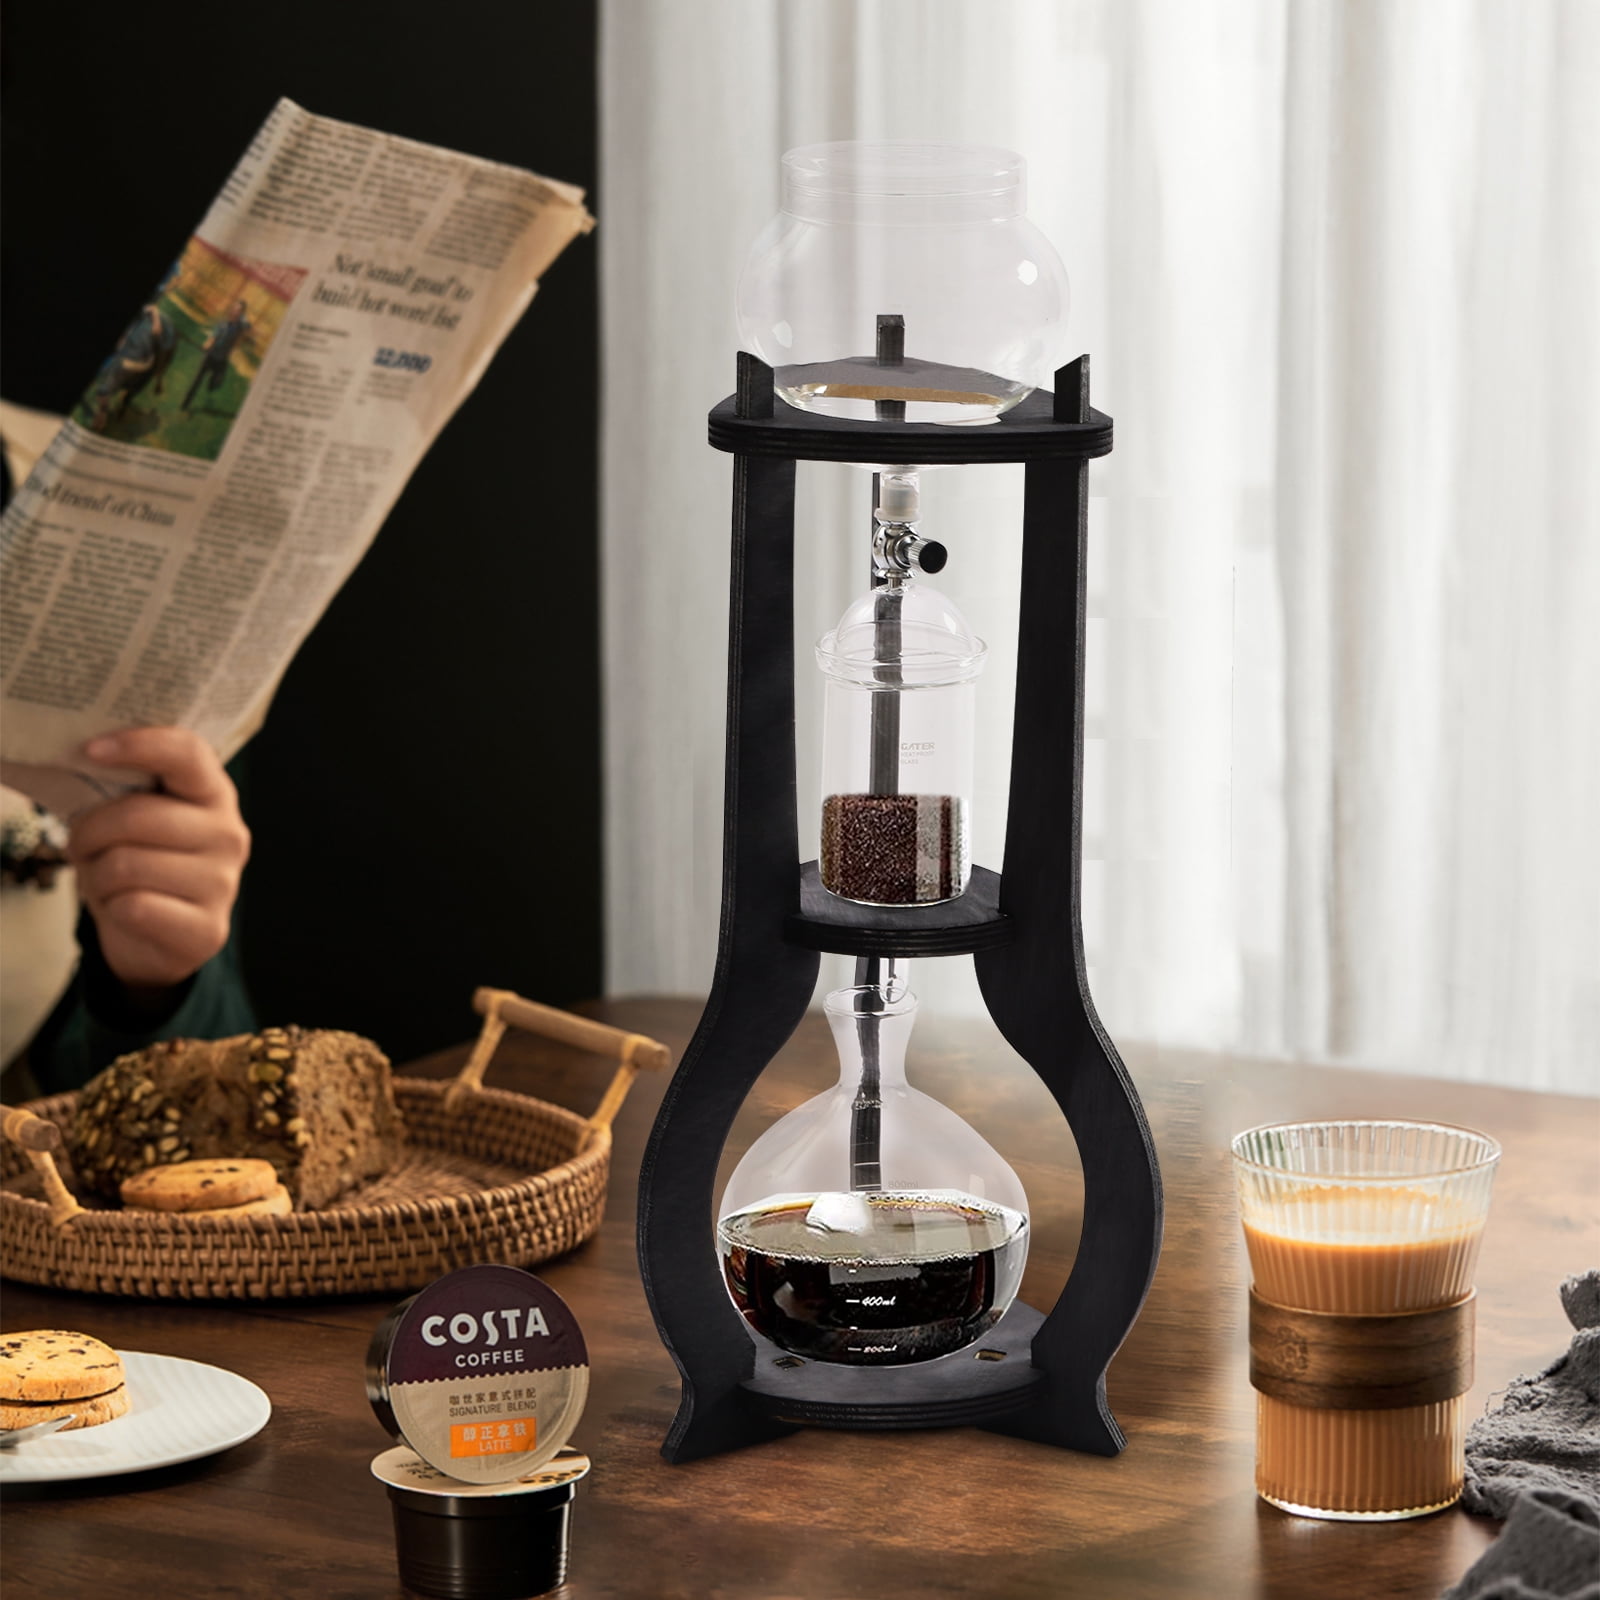 Nispira Retro Ice Cold Brew Dripping Coffee Maker Tower, 600ml in Wooden (BD-7)